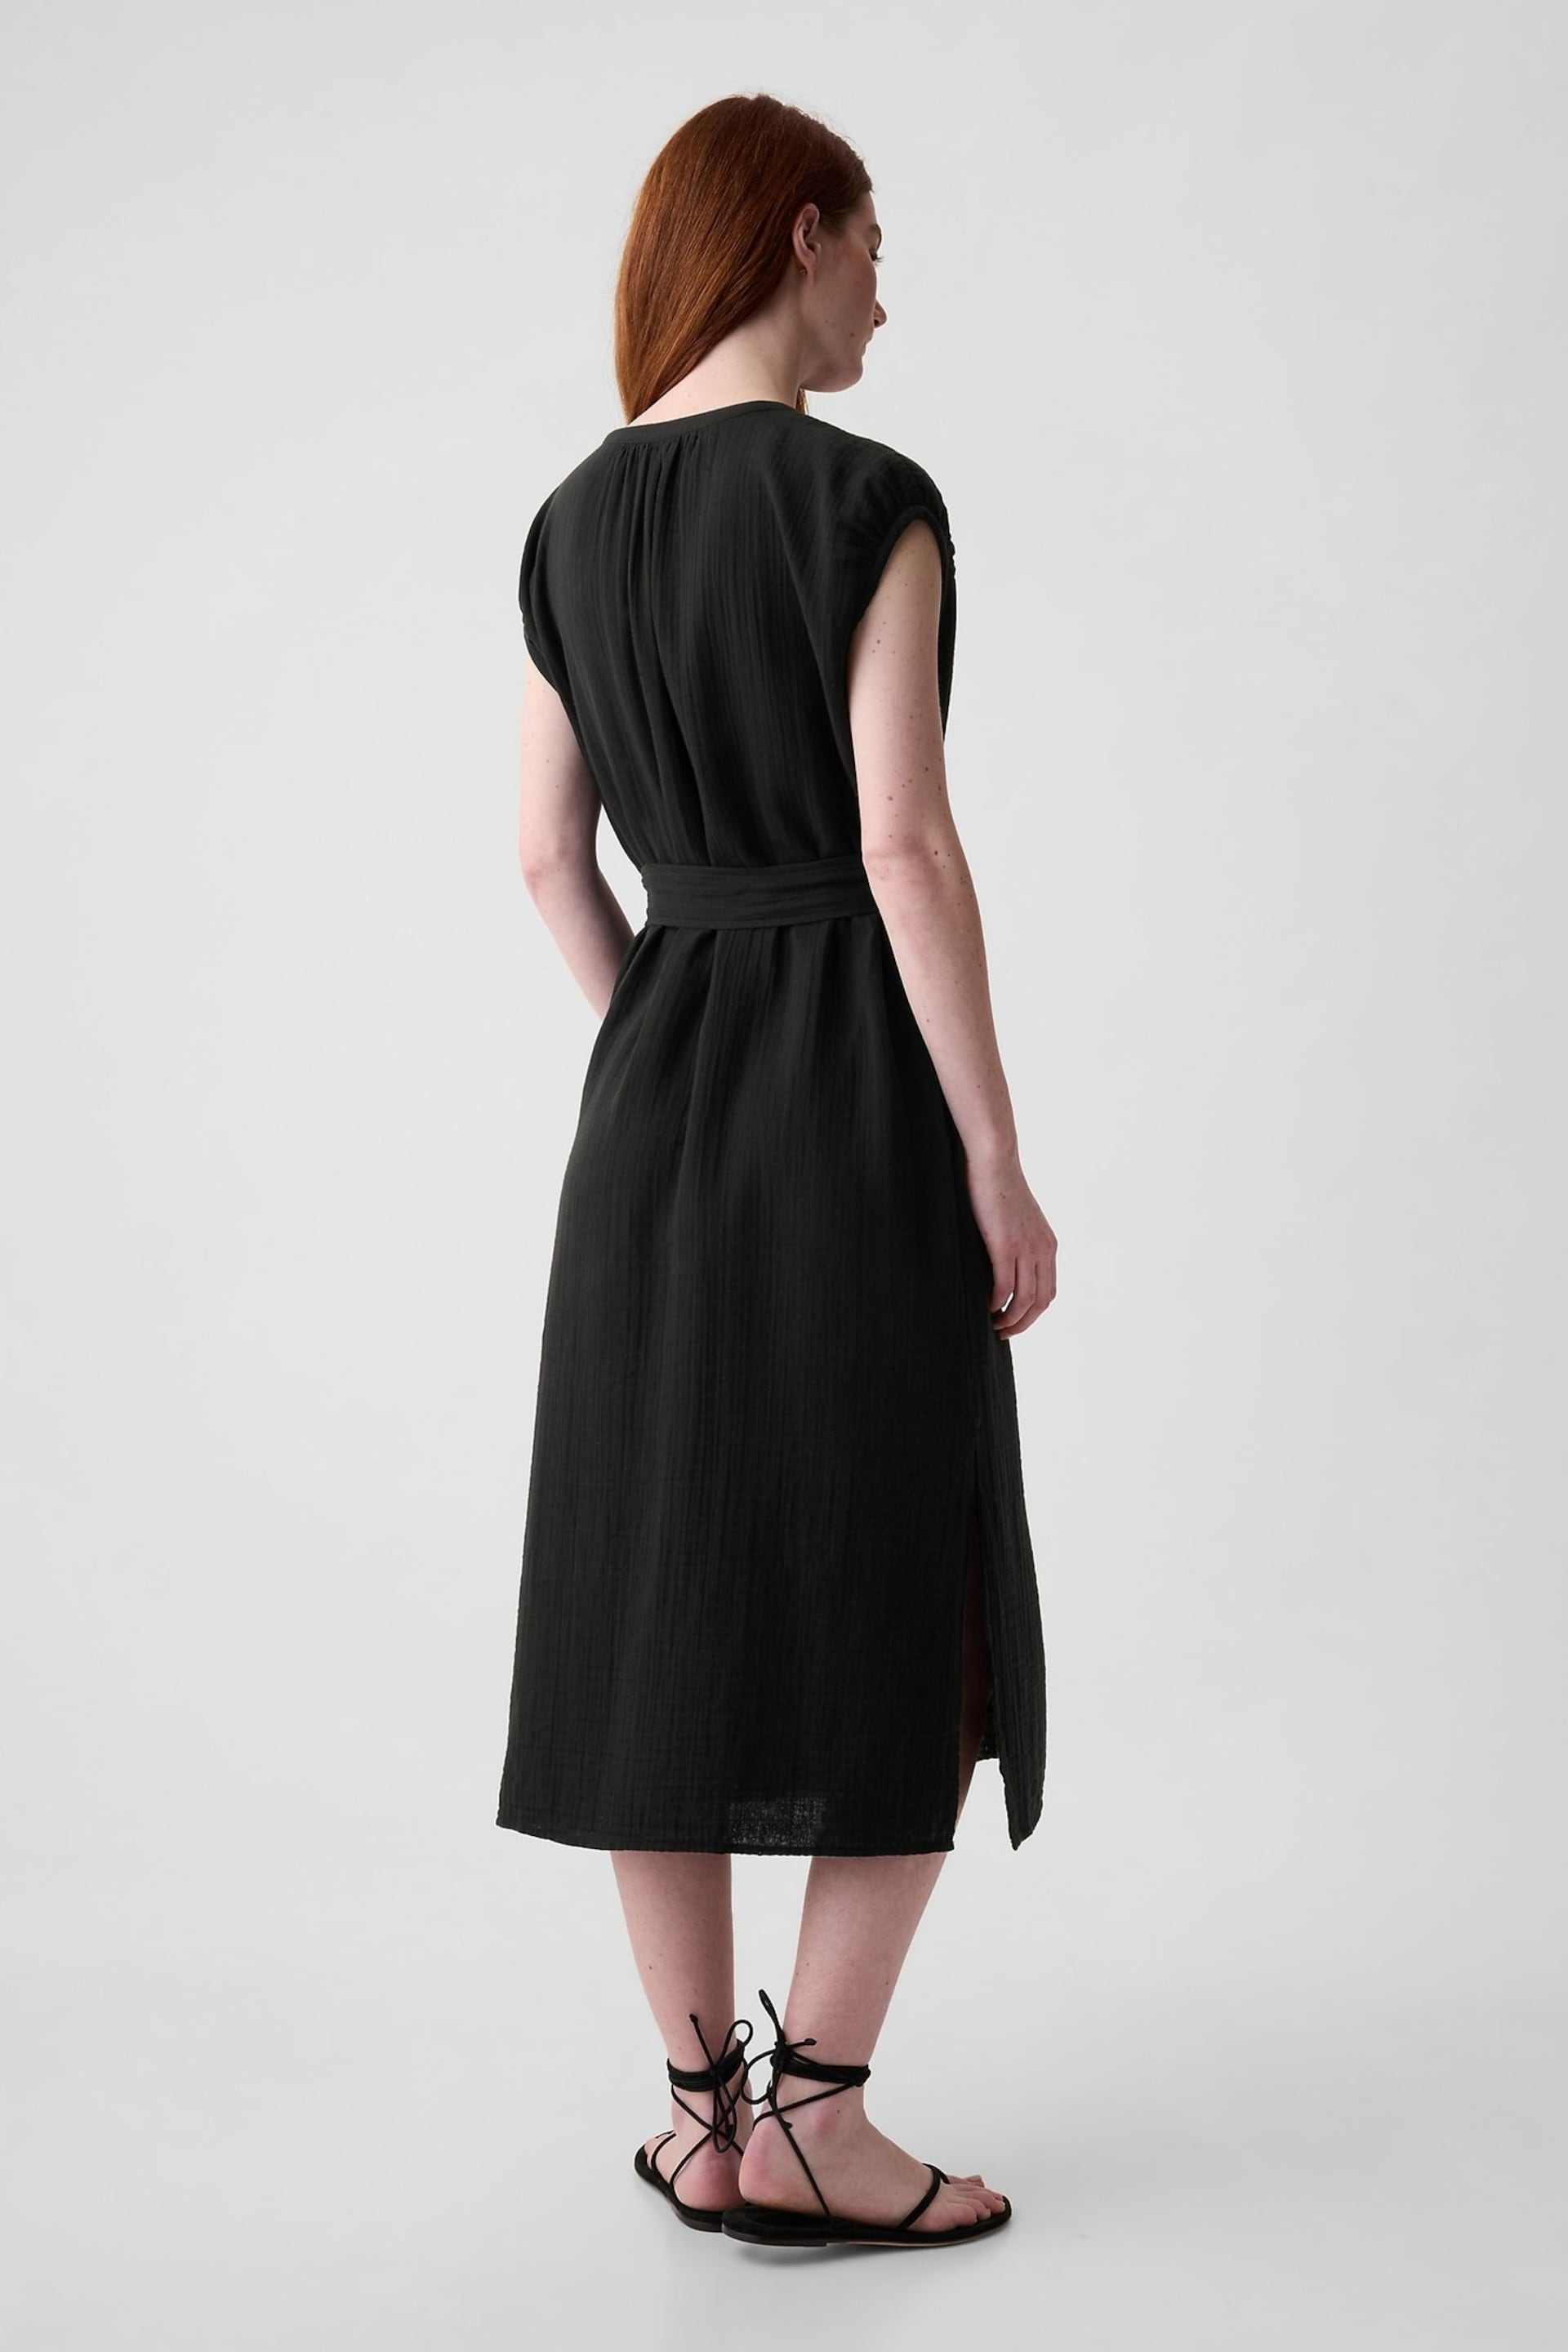 Gap Black Crinkle Cotton Belted Midi Shirt Dress - Image 2 of 3